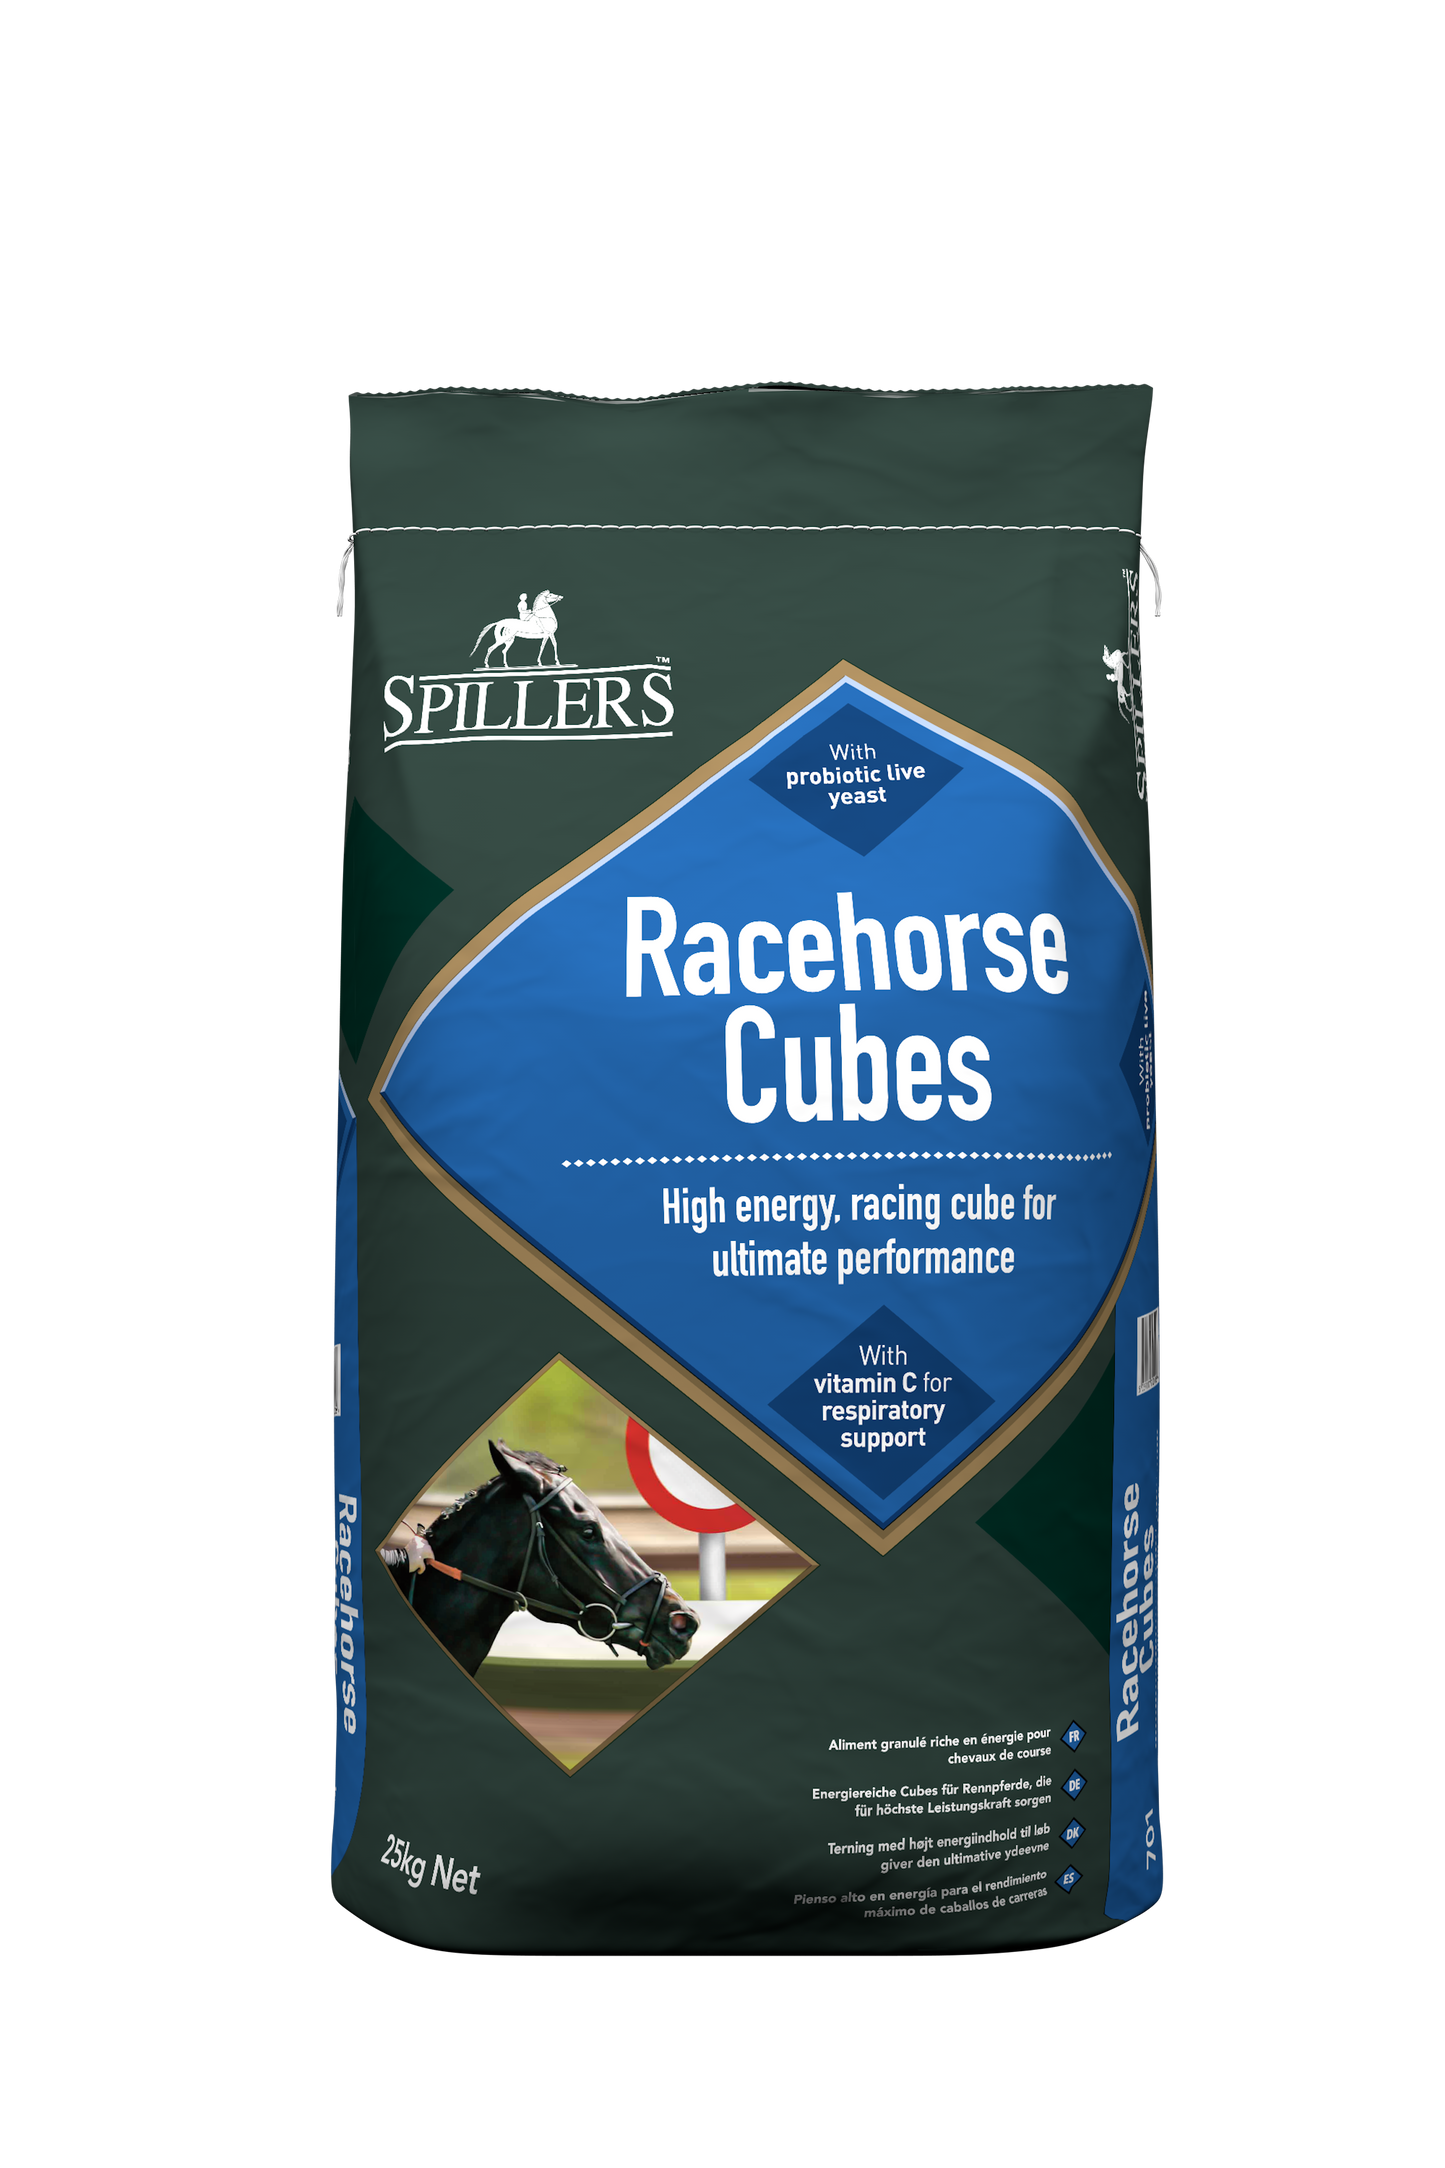 Spillers Racehorse Cubes